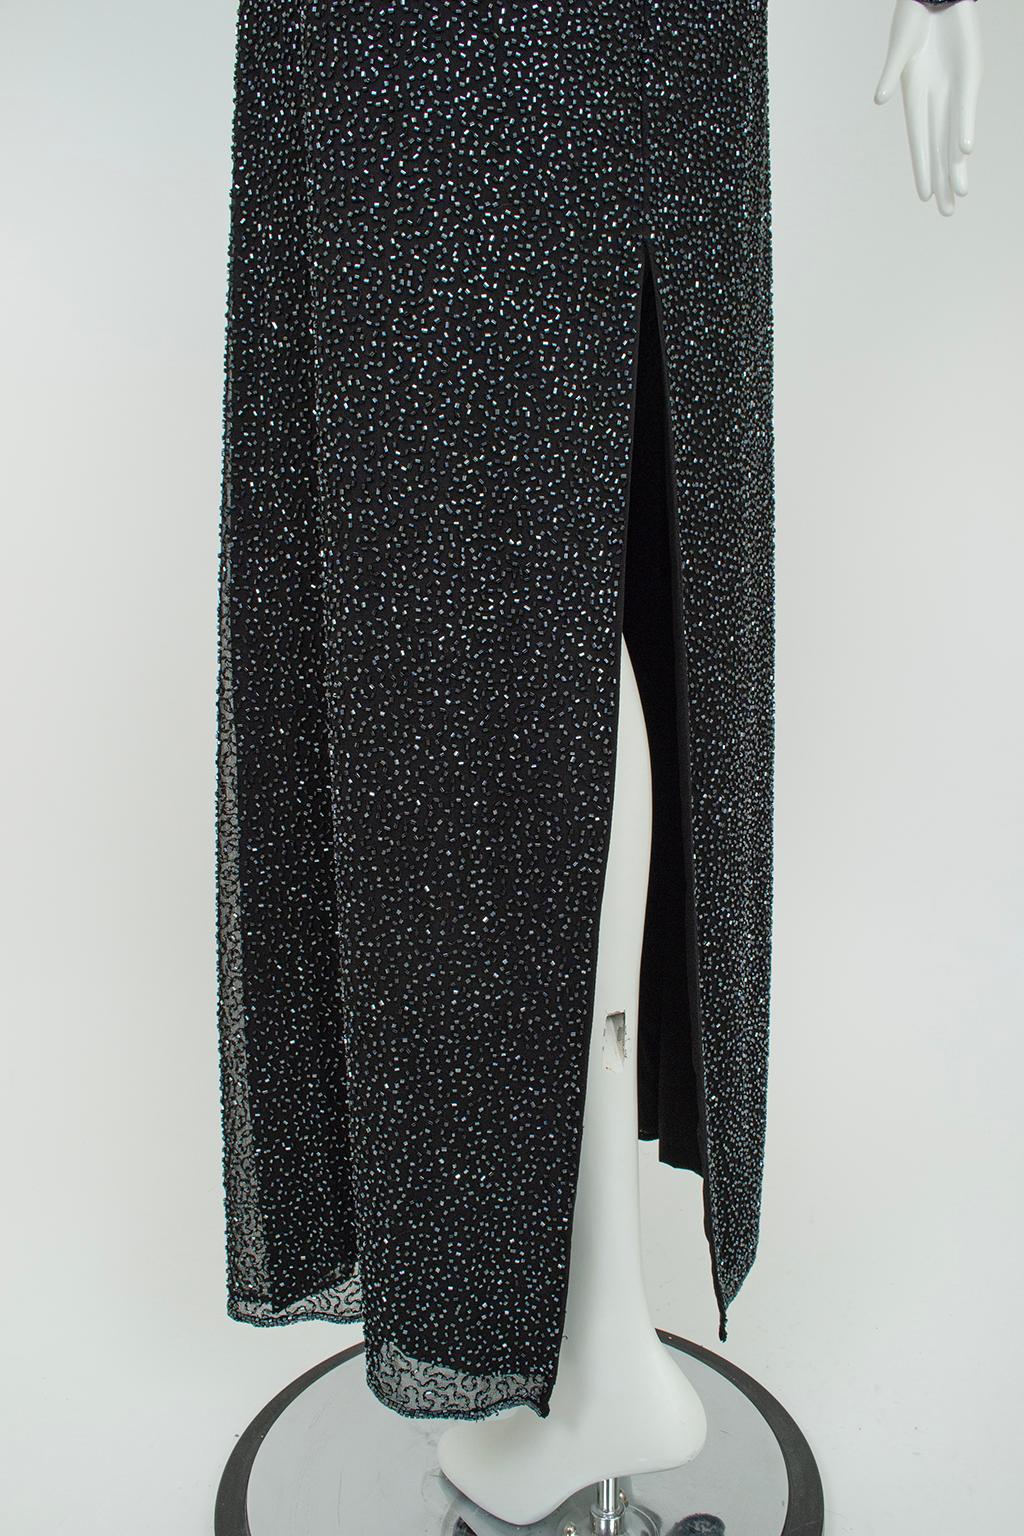 Lillie Rubin Black Full Length Beaded Column Gown w Illusion Sleeves – L, 21st C For Sale 8